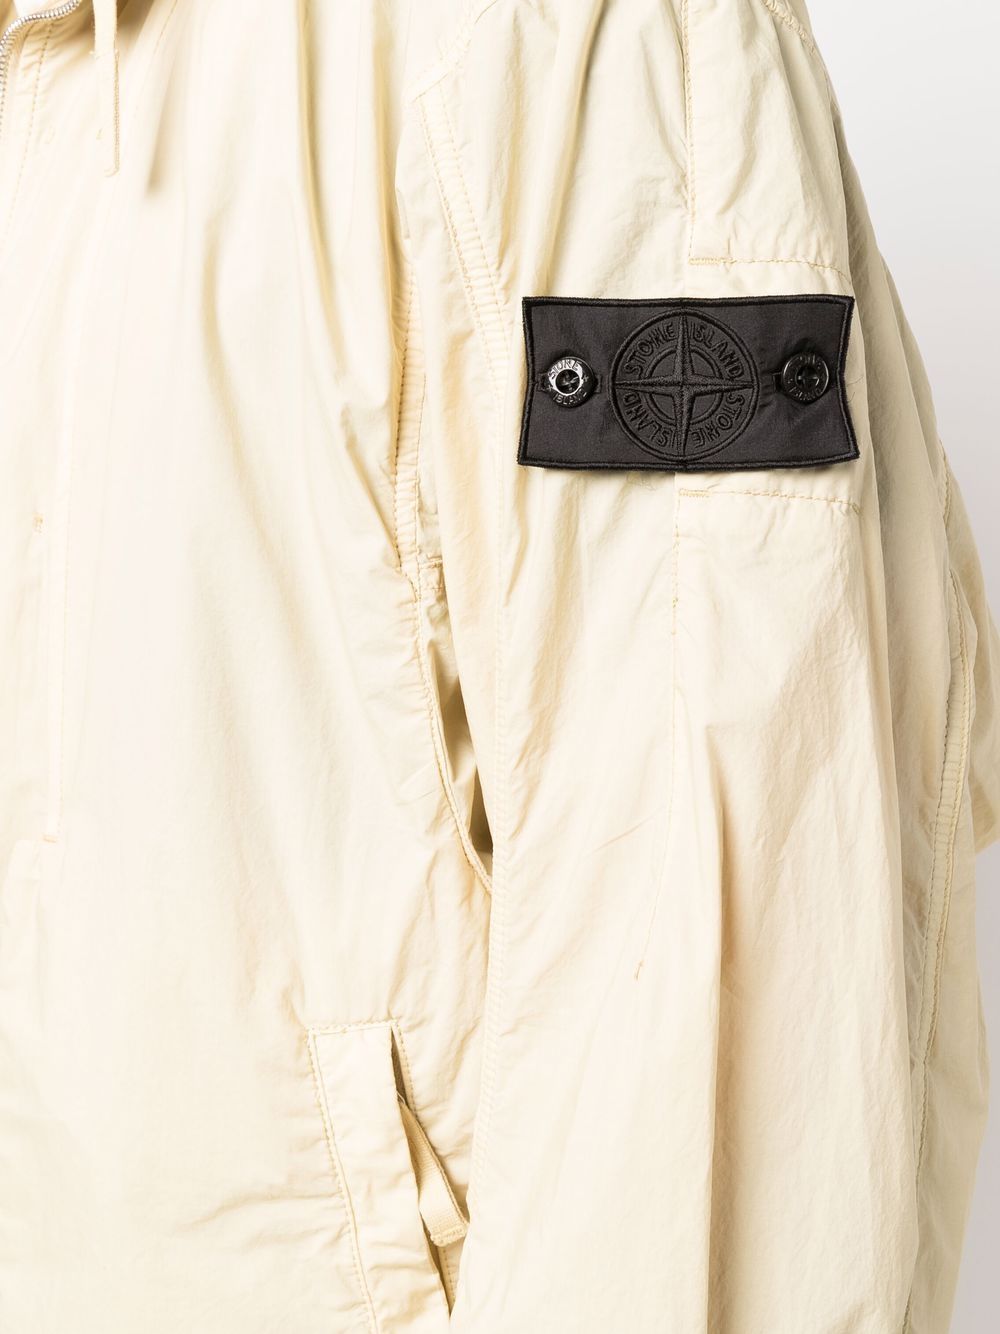 STONE ISLAND SHADOW PROJECT Lightweight hooded jacket Sand - MAISONDEFASHION.COM